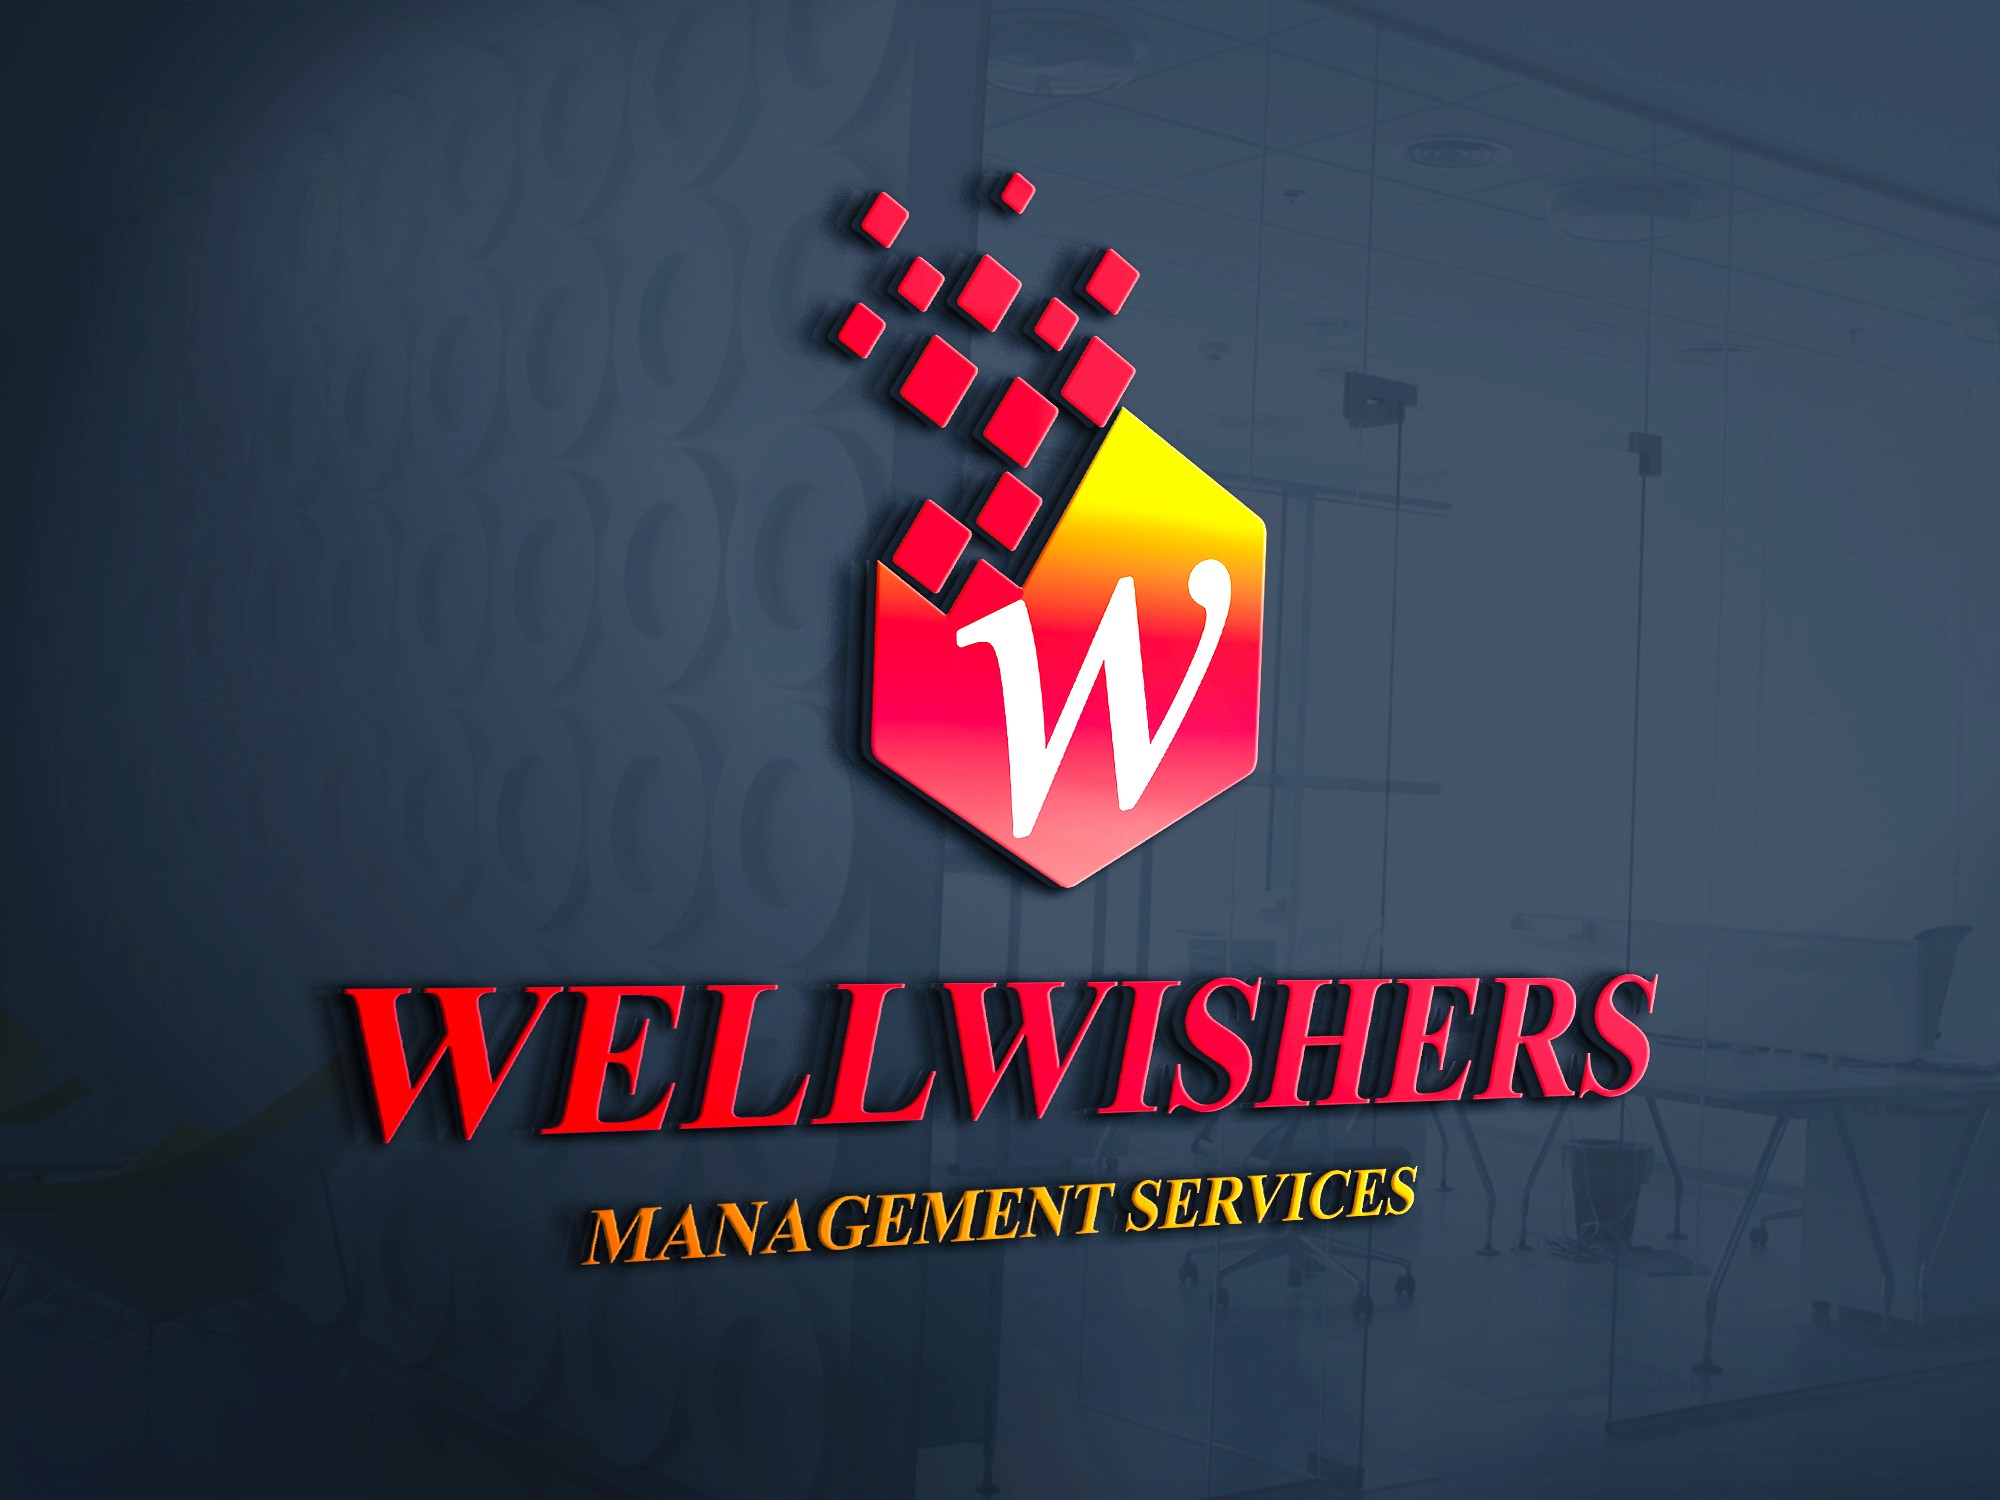 Wellwishers